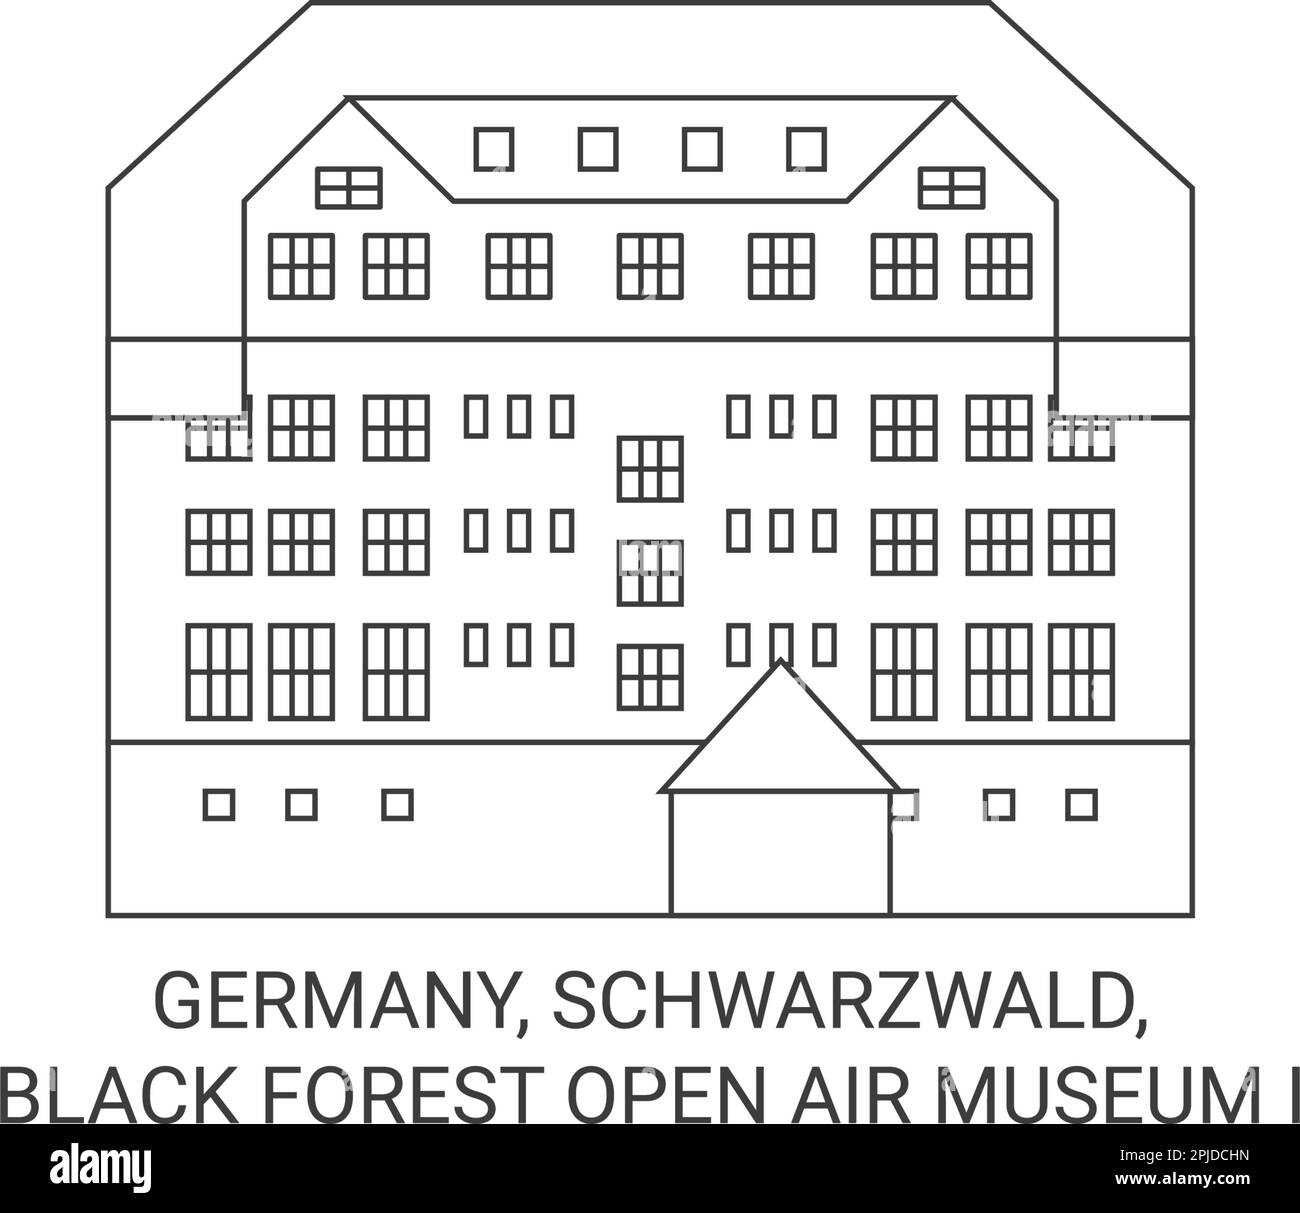 Allemagne, Schwarzwald, Black Forest Open Air Museum I voyage illustration vecteur Illustration de Vecteur